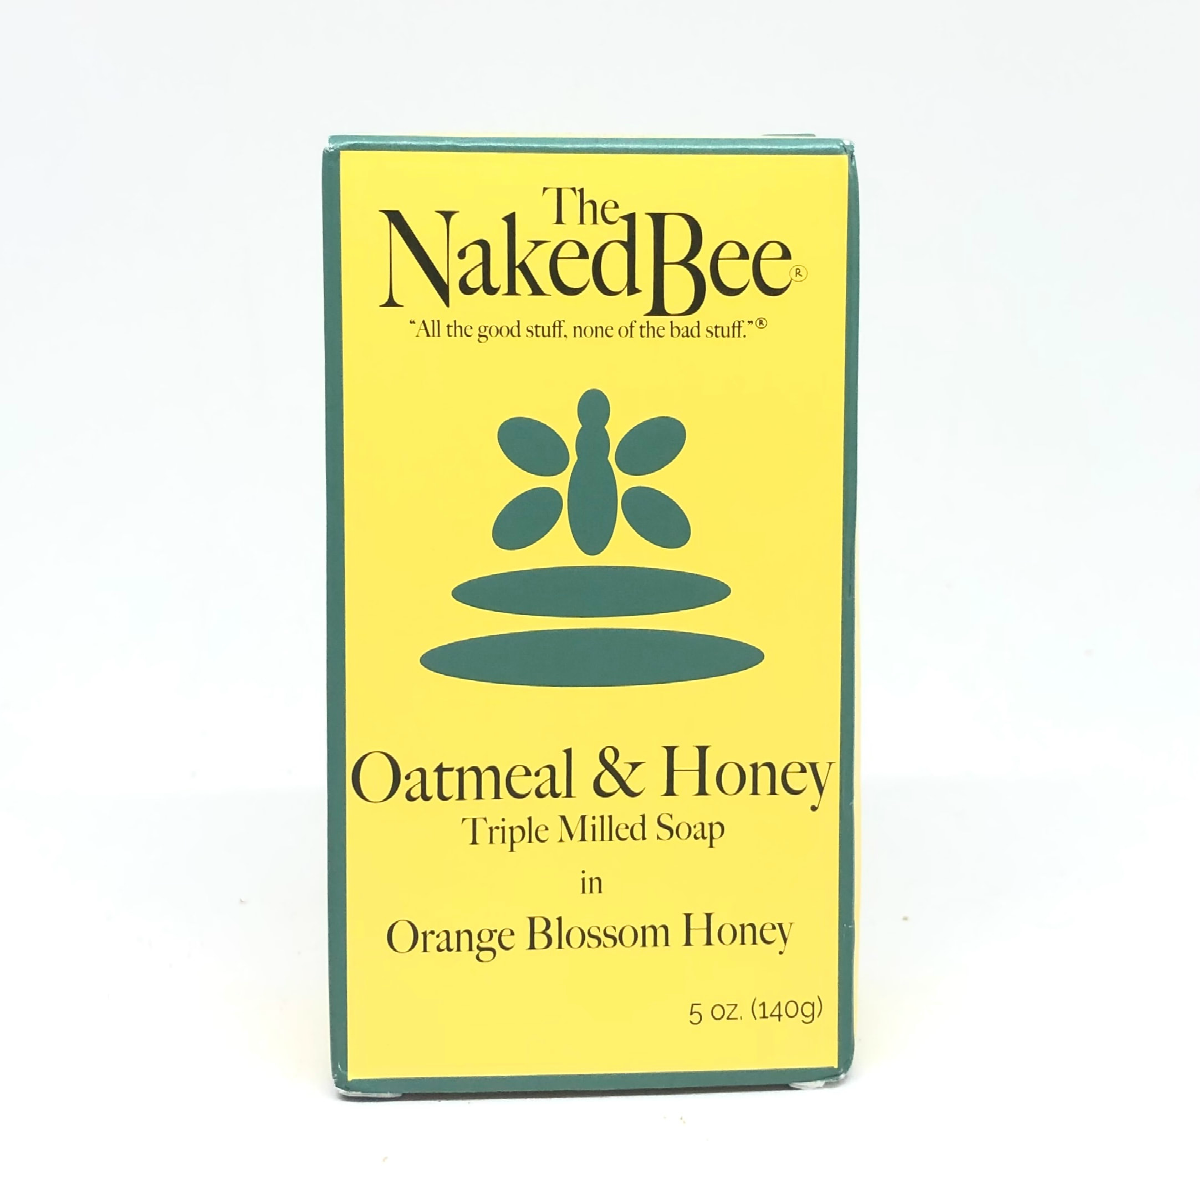 The Naked Bee Oatmeal & Honey soap